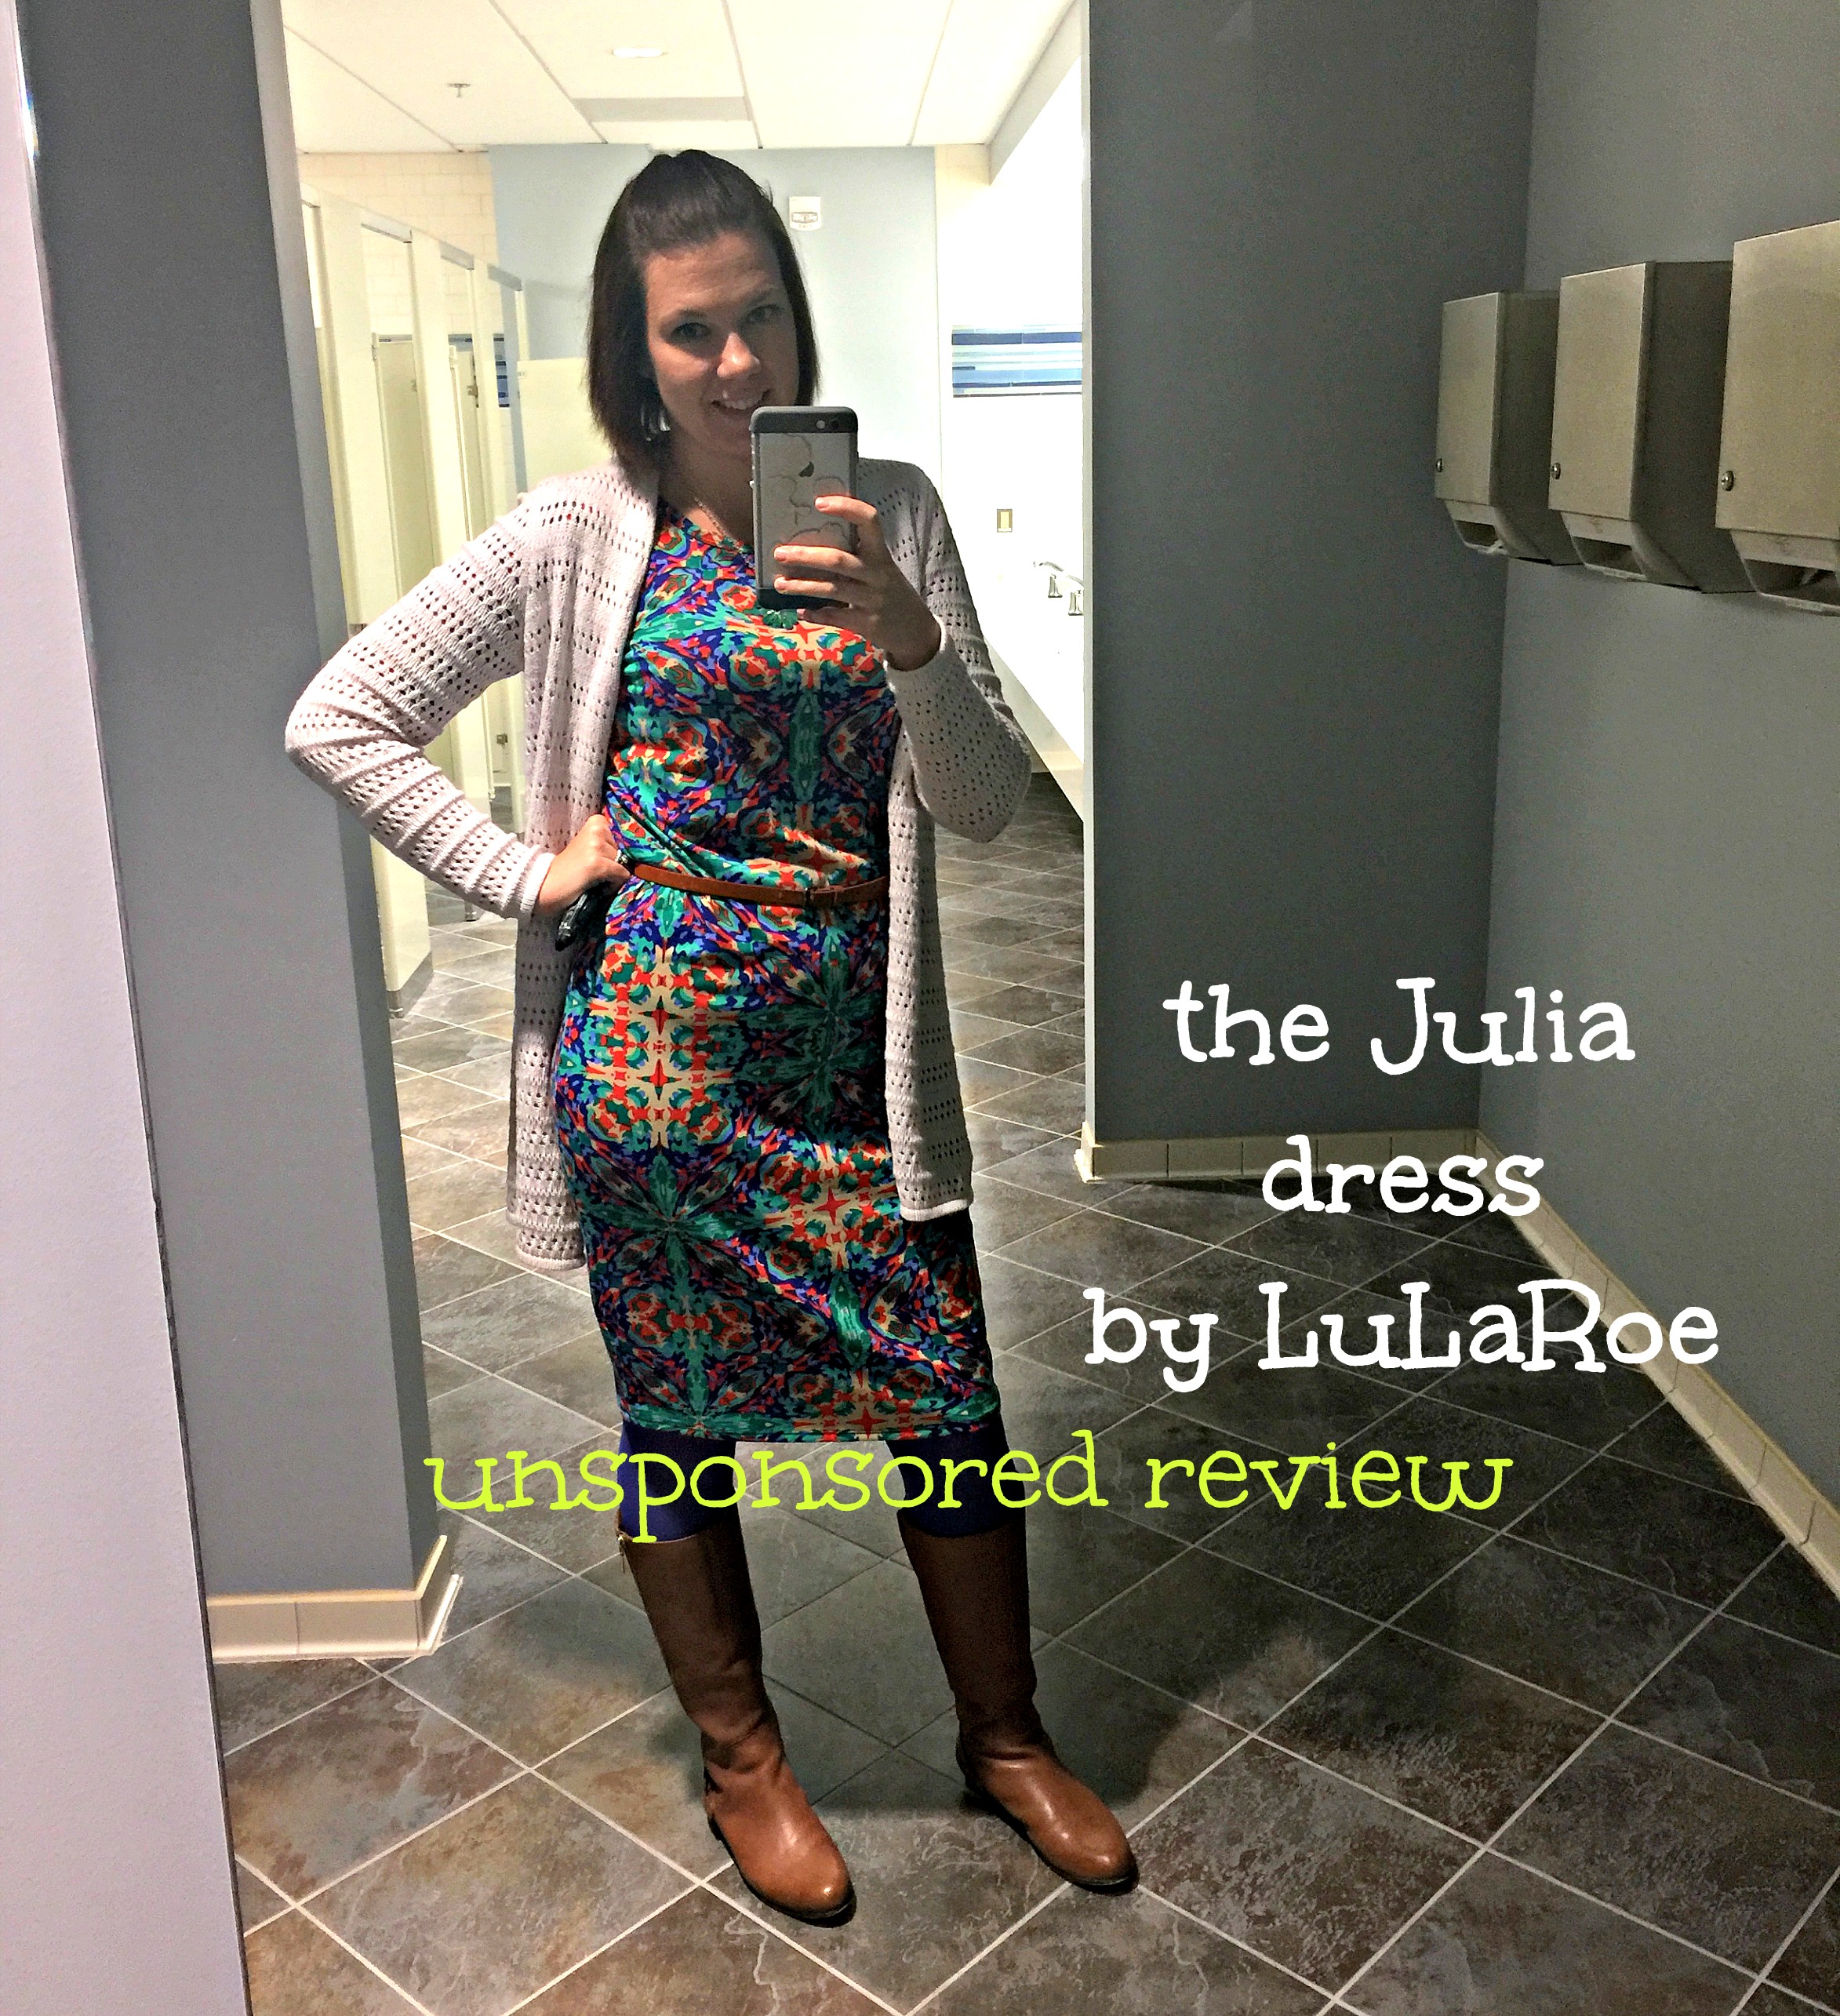 Unsponsored review of LuLaRoe Julia dress by a tall woman